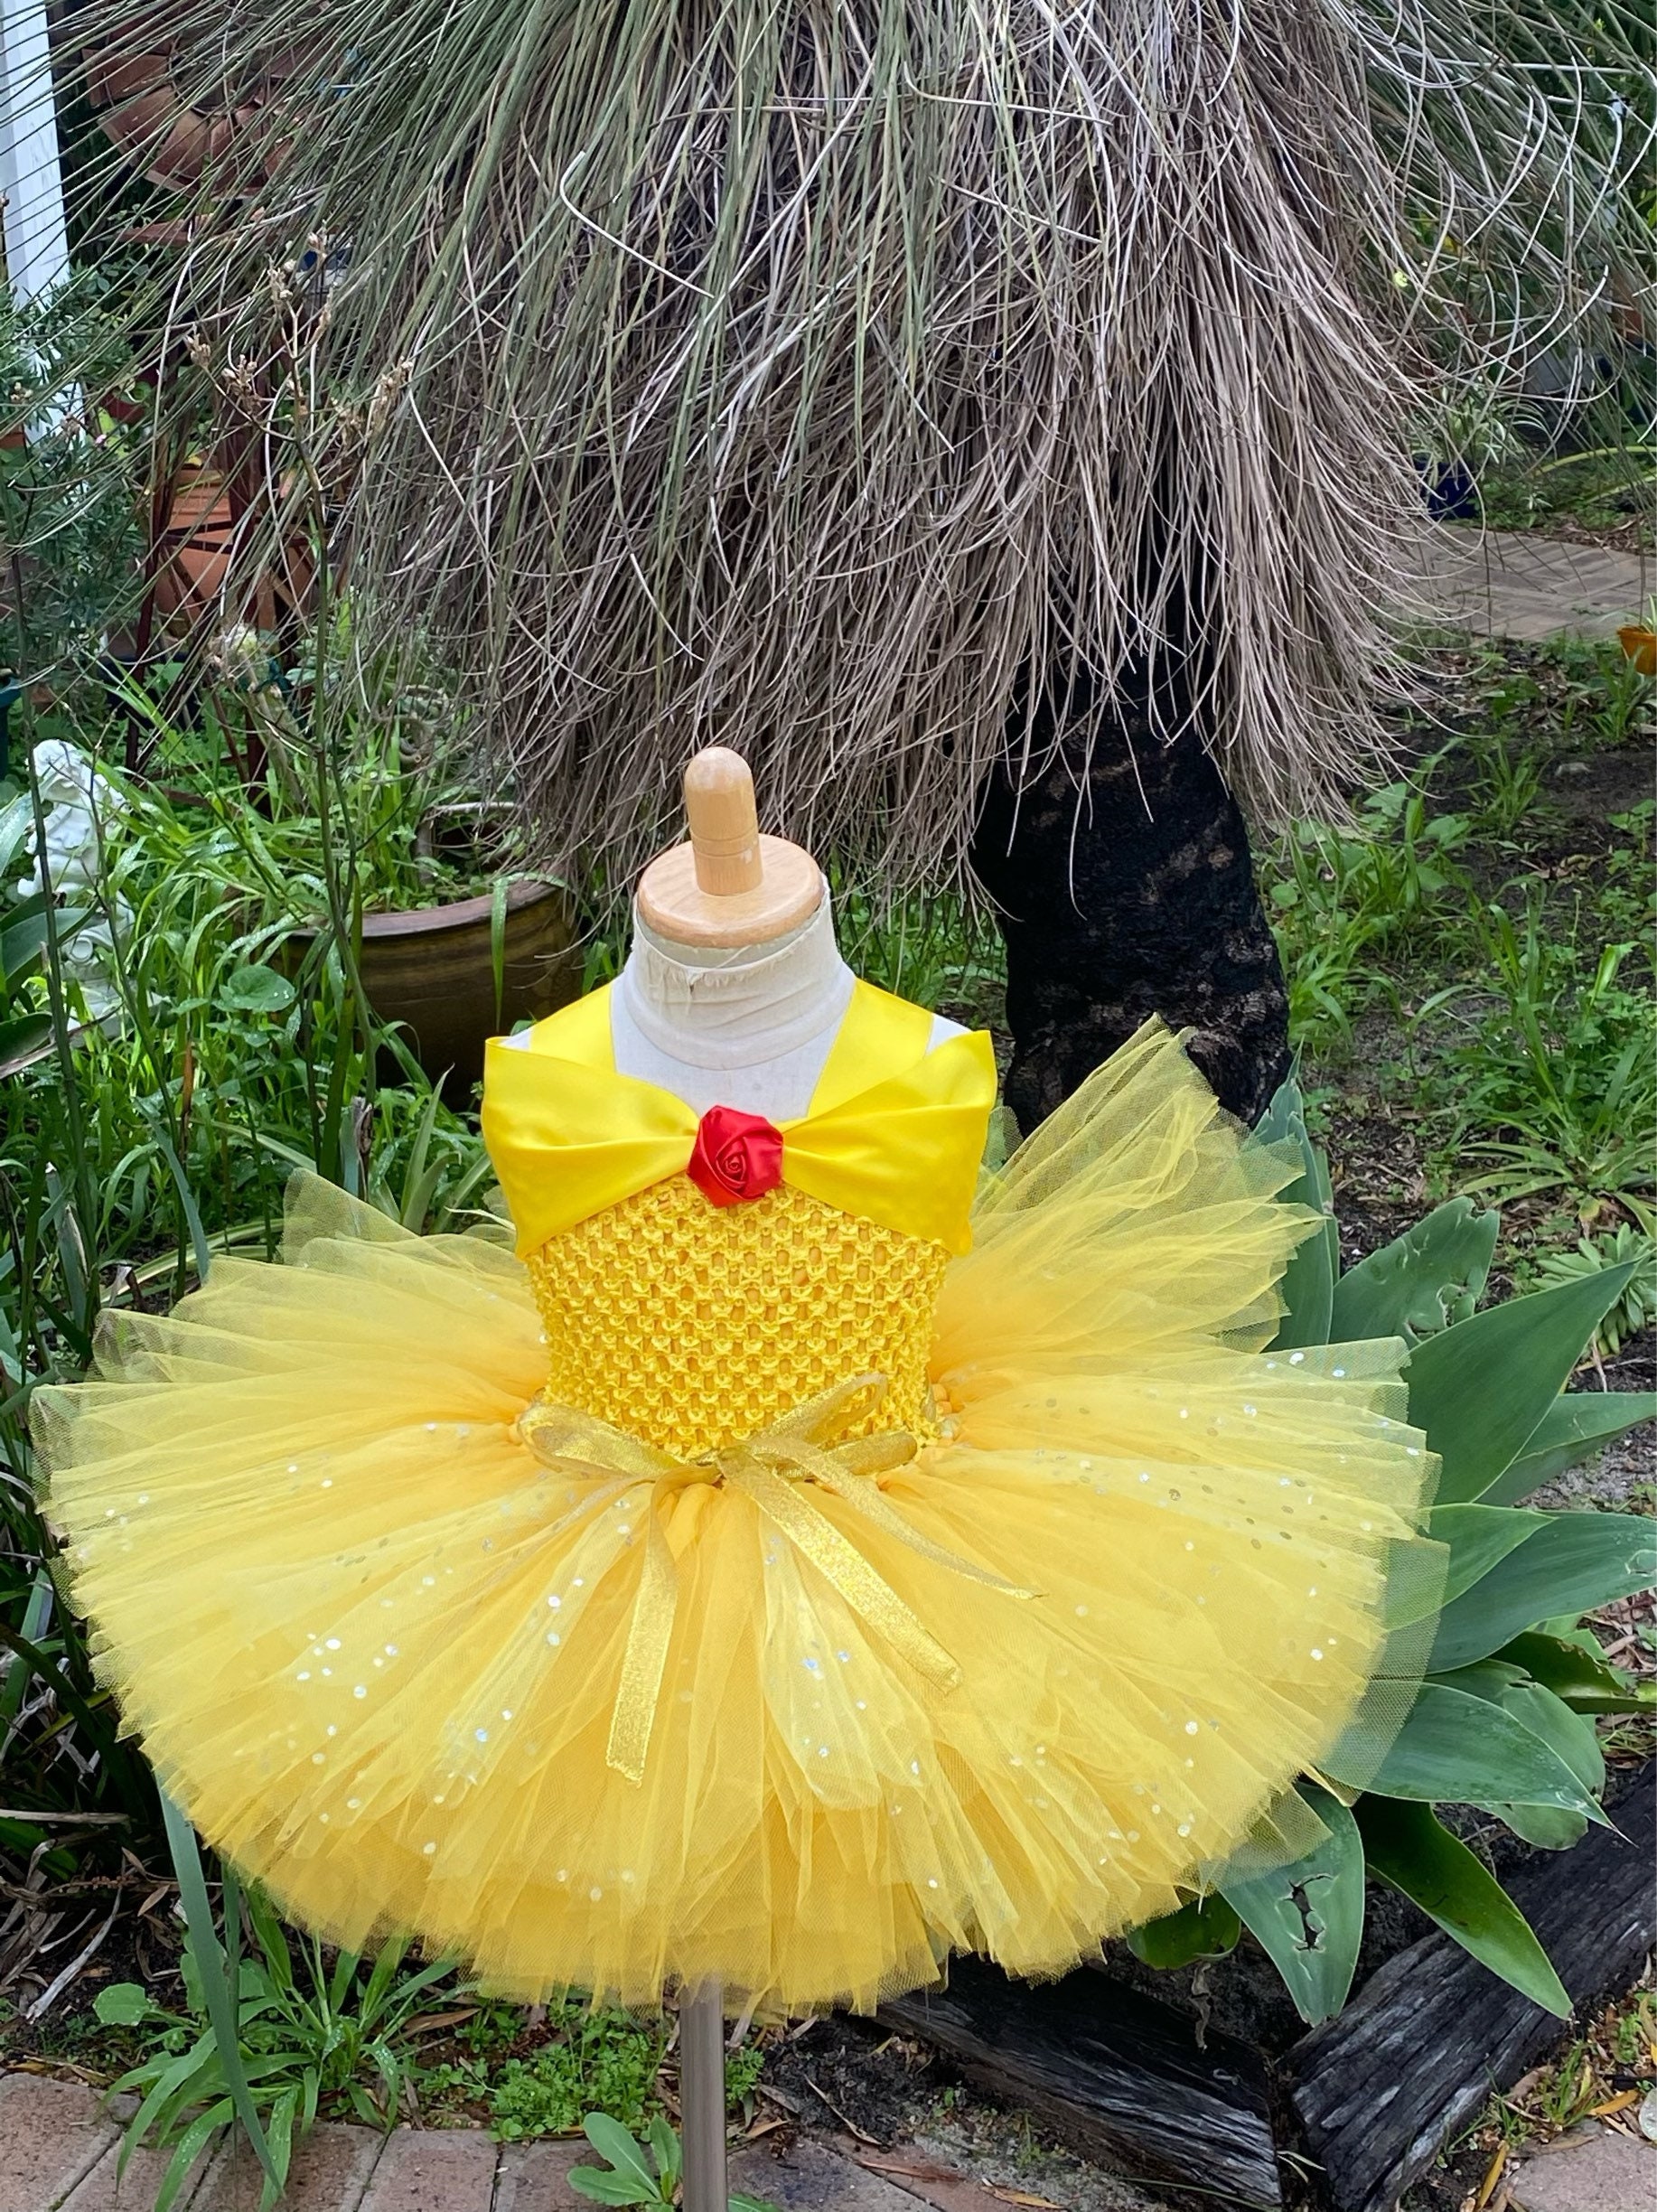 Vestido Amarillo Brillante Tutu - Vestido princesa